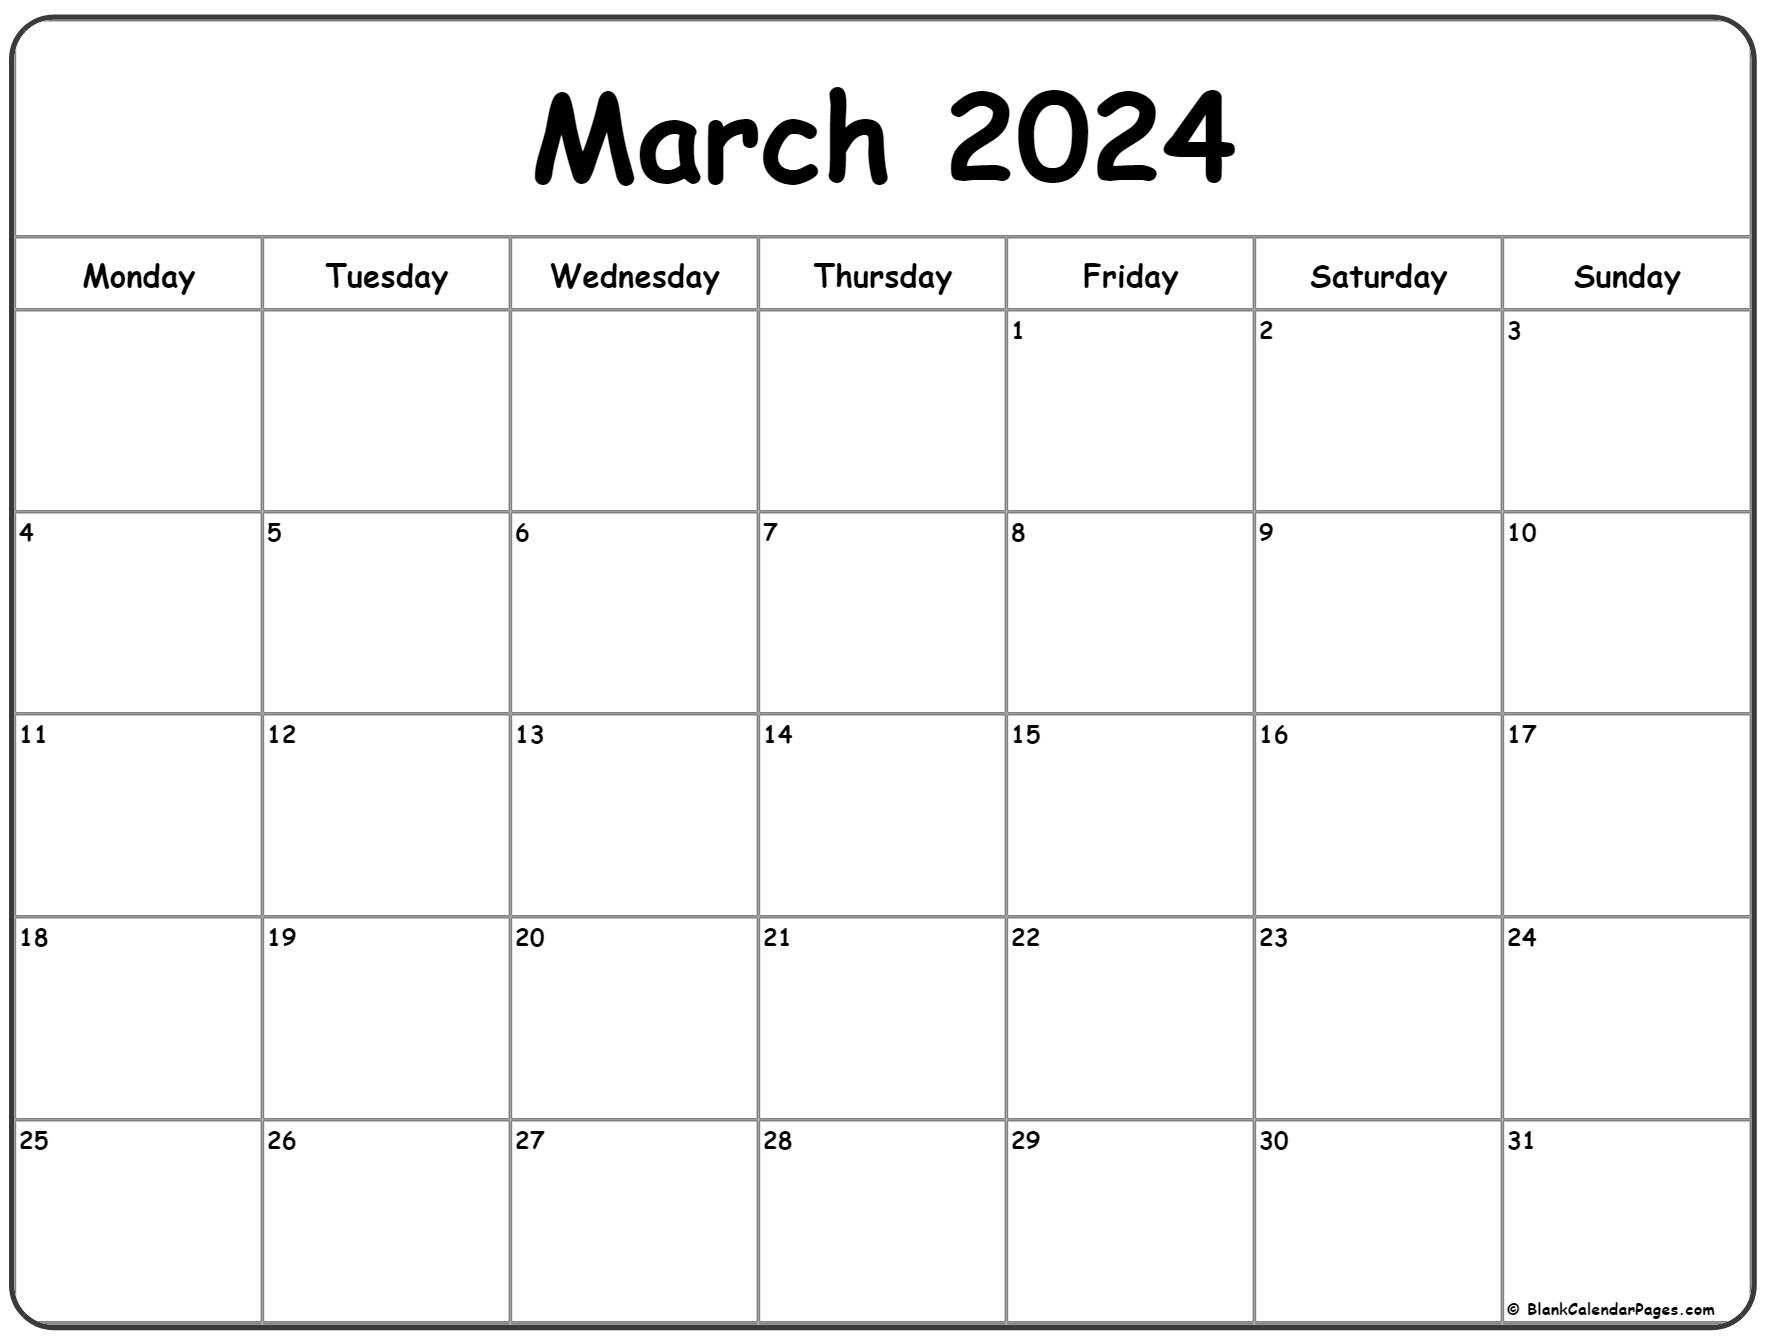 March 2022 Blank Calendar March 2022 Monday Calendar | Monday To Sunday